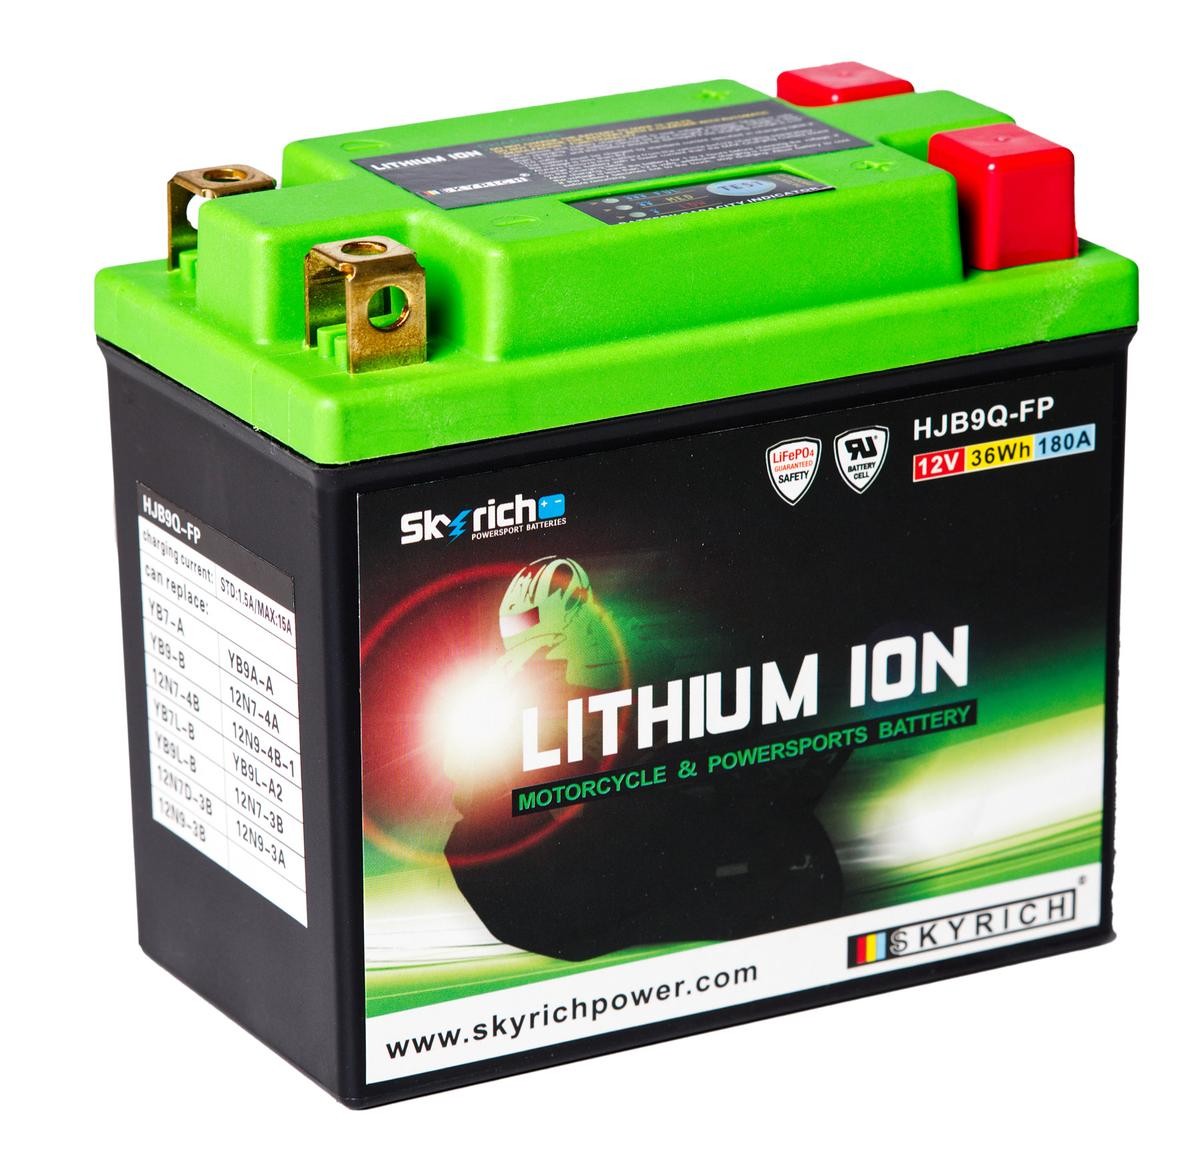 DAELIM YC Batterie 12V 3Ah 180A N Li-Ionen-Batterie SKYRICH LITHIUM ION HJB9Q-FP